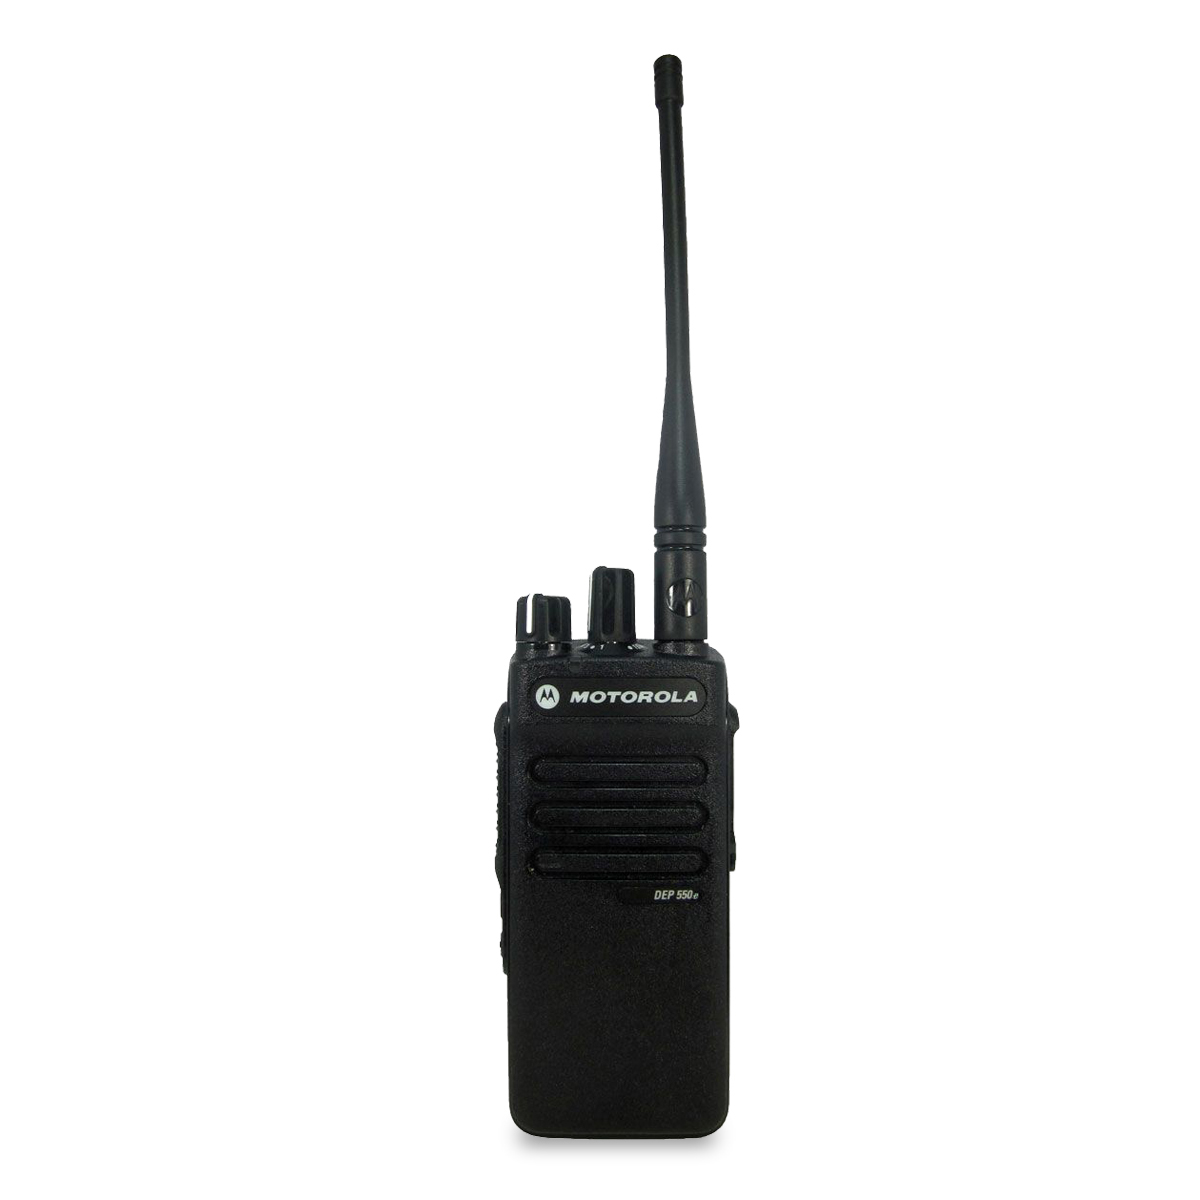 Radio Motorola DEP550e Digital LAH02JDC9UA1AN VHF 136-174 MHz